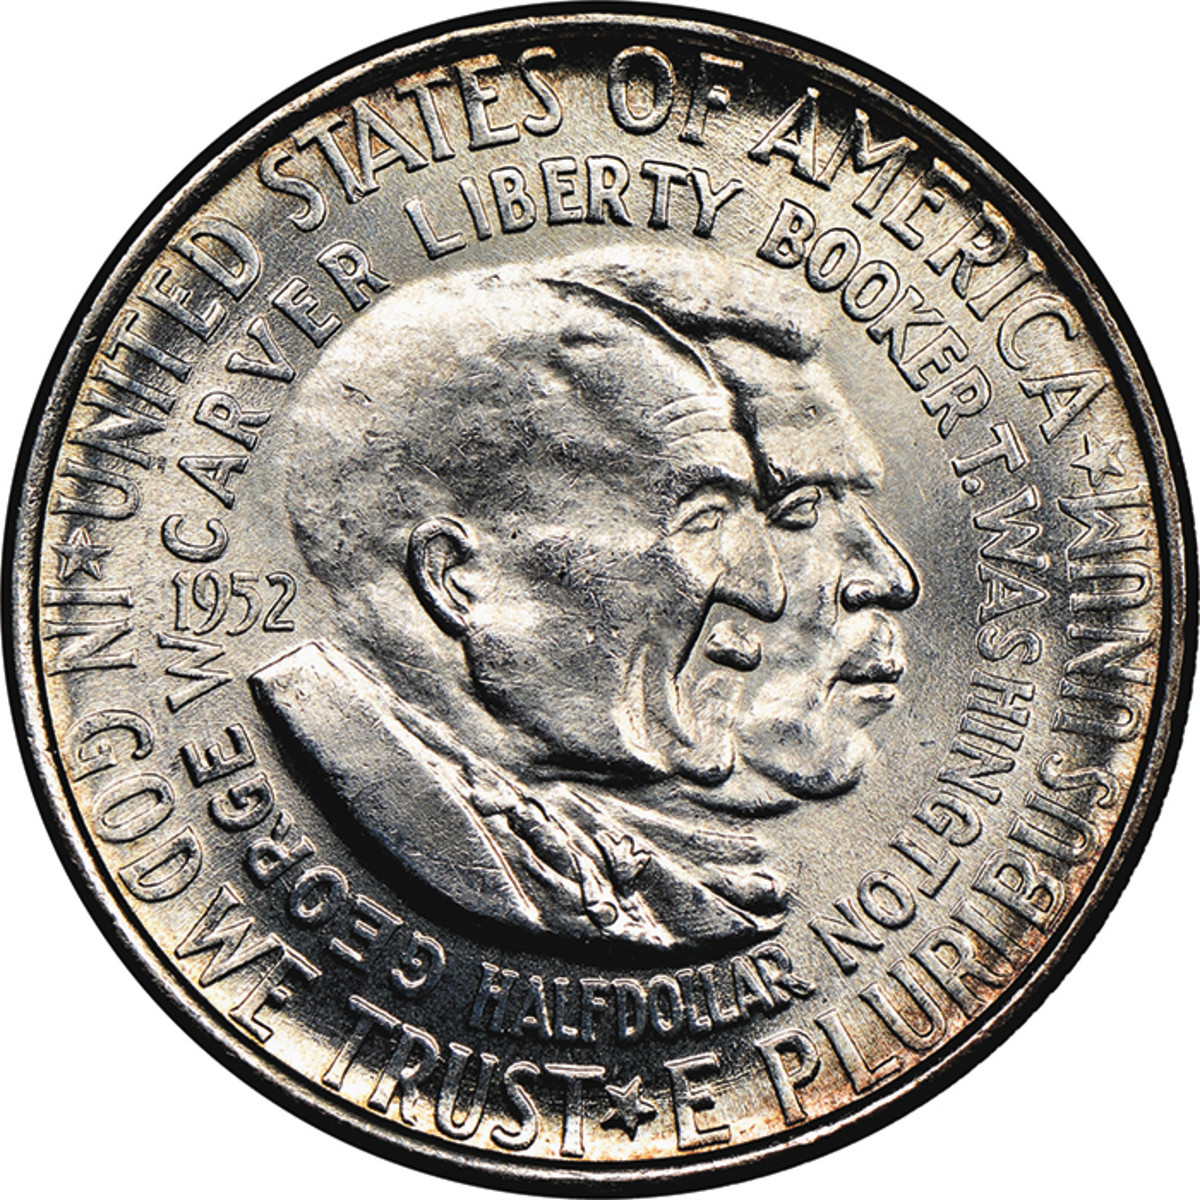 1952 Washington/Carver commemorative half dollar. (Image courtesy Numismatic Guaranty Company.)